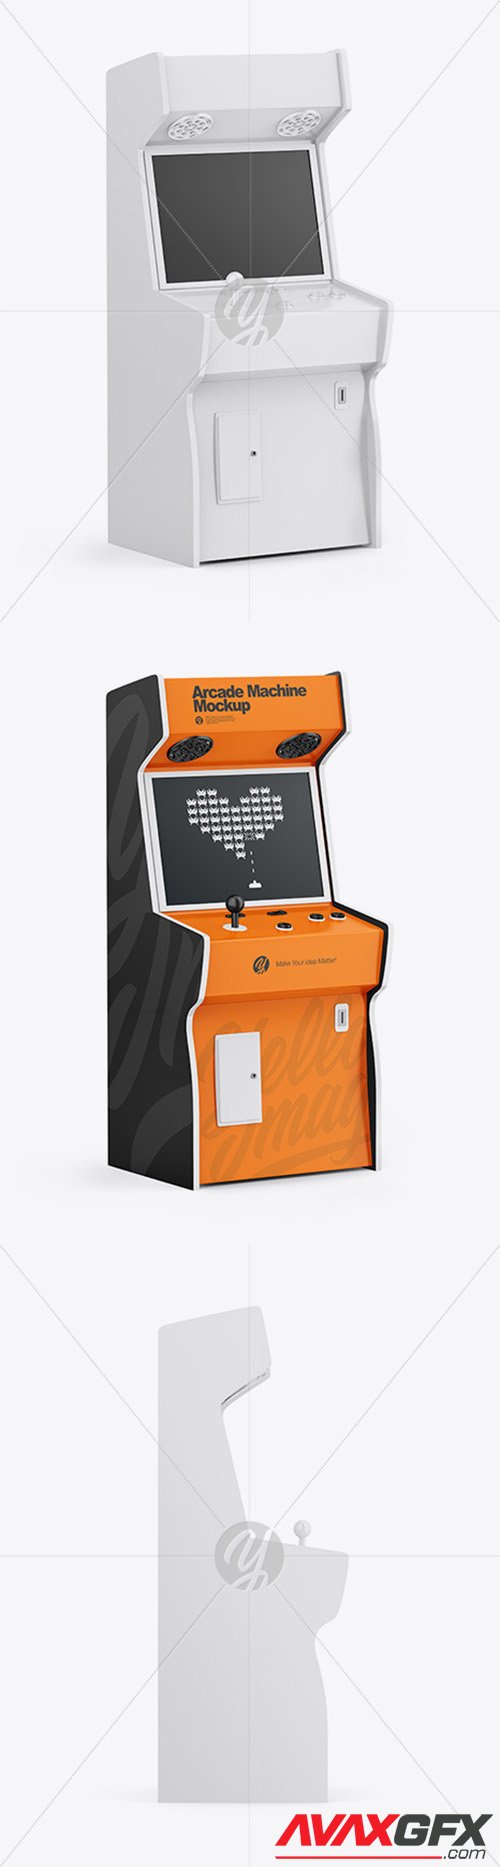 Arcade Machine Mockup 65198